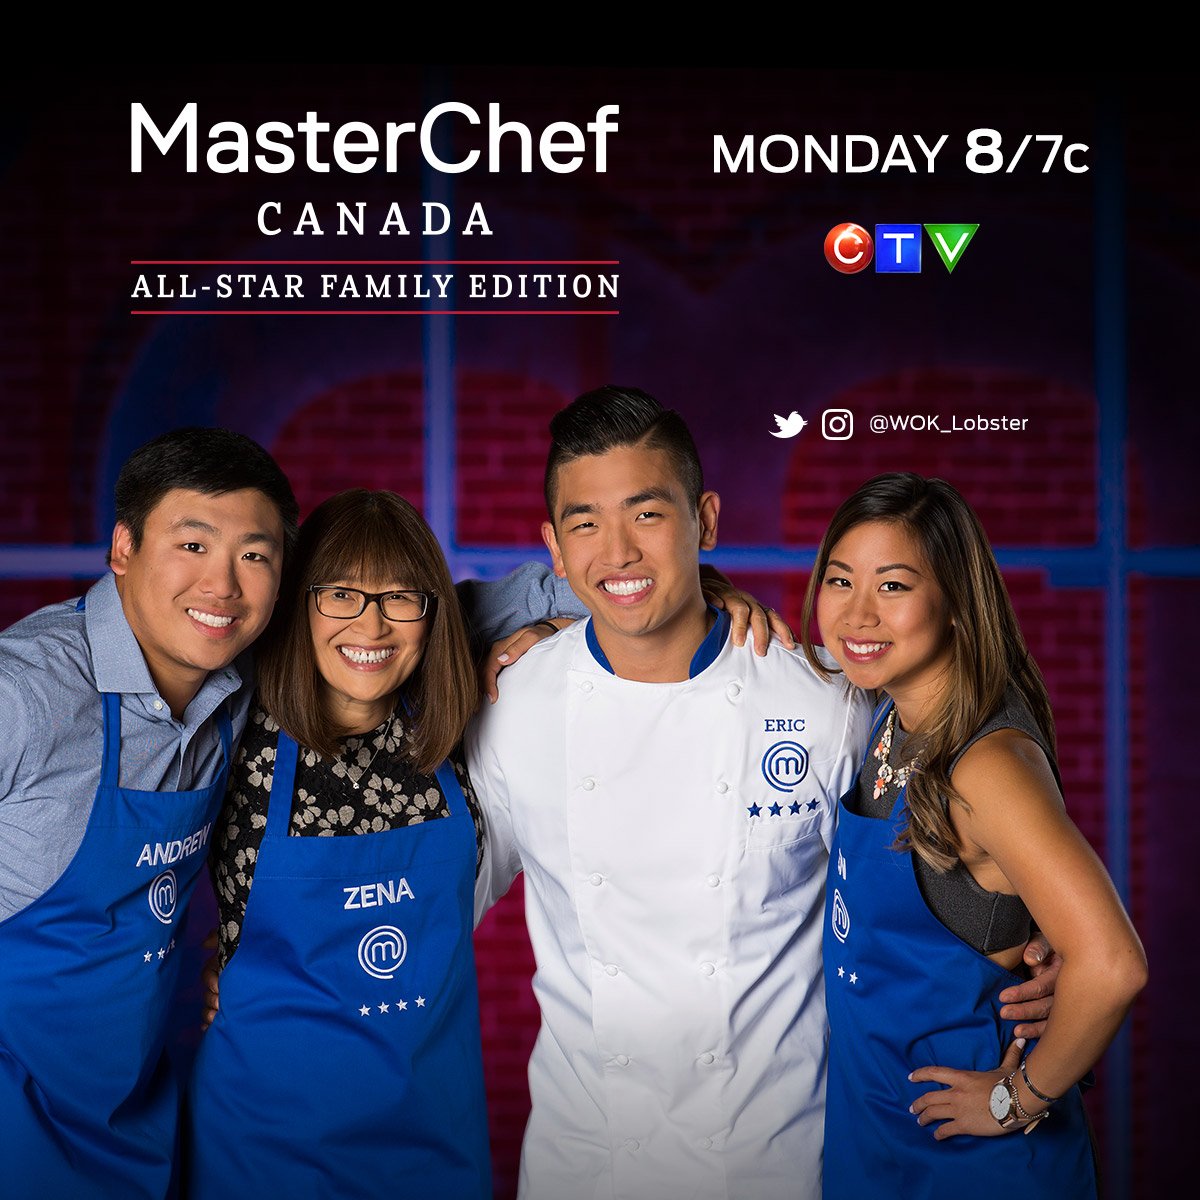 Tune into CTV Dec 5th @ 8pm to watch the Masterchef Canada All-star family edition! #masterchefcanada #food #allstars #familychaos